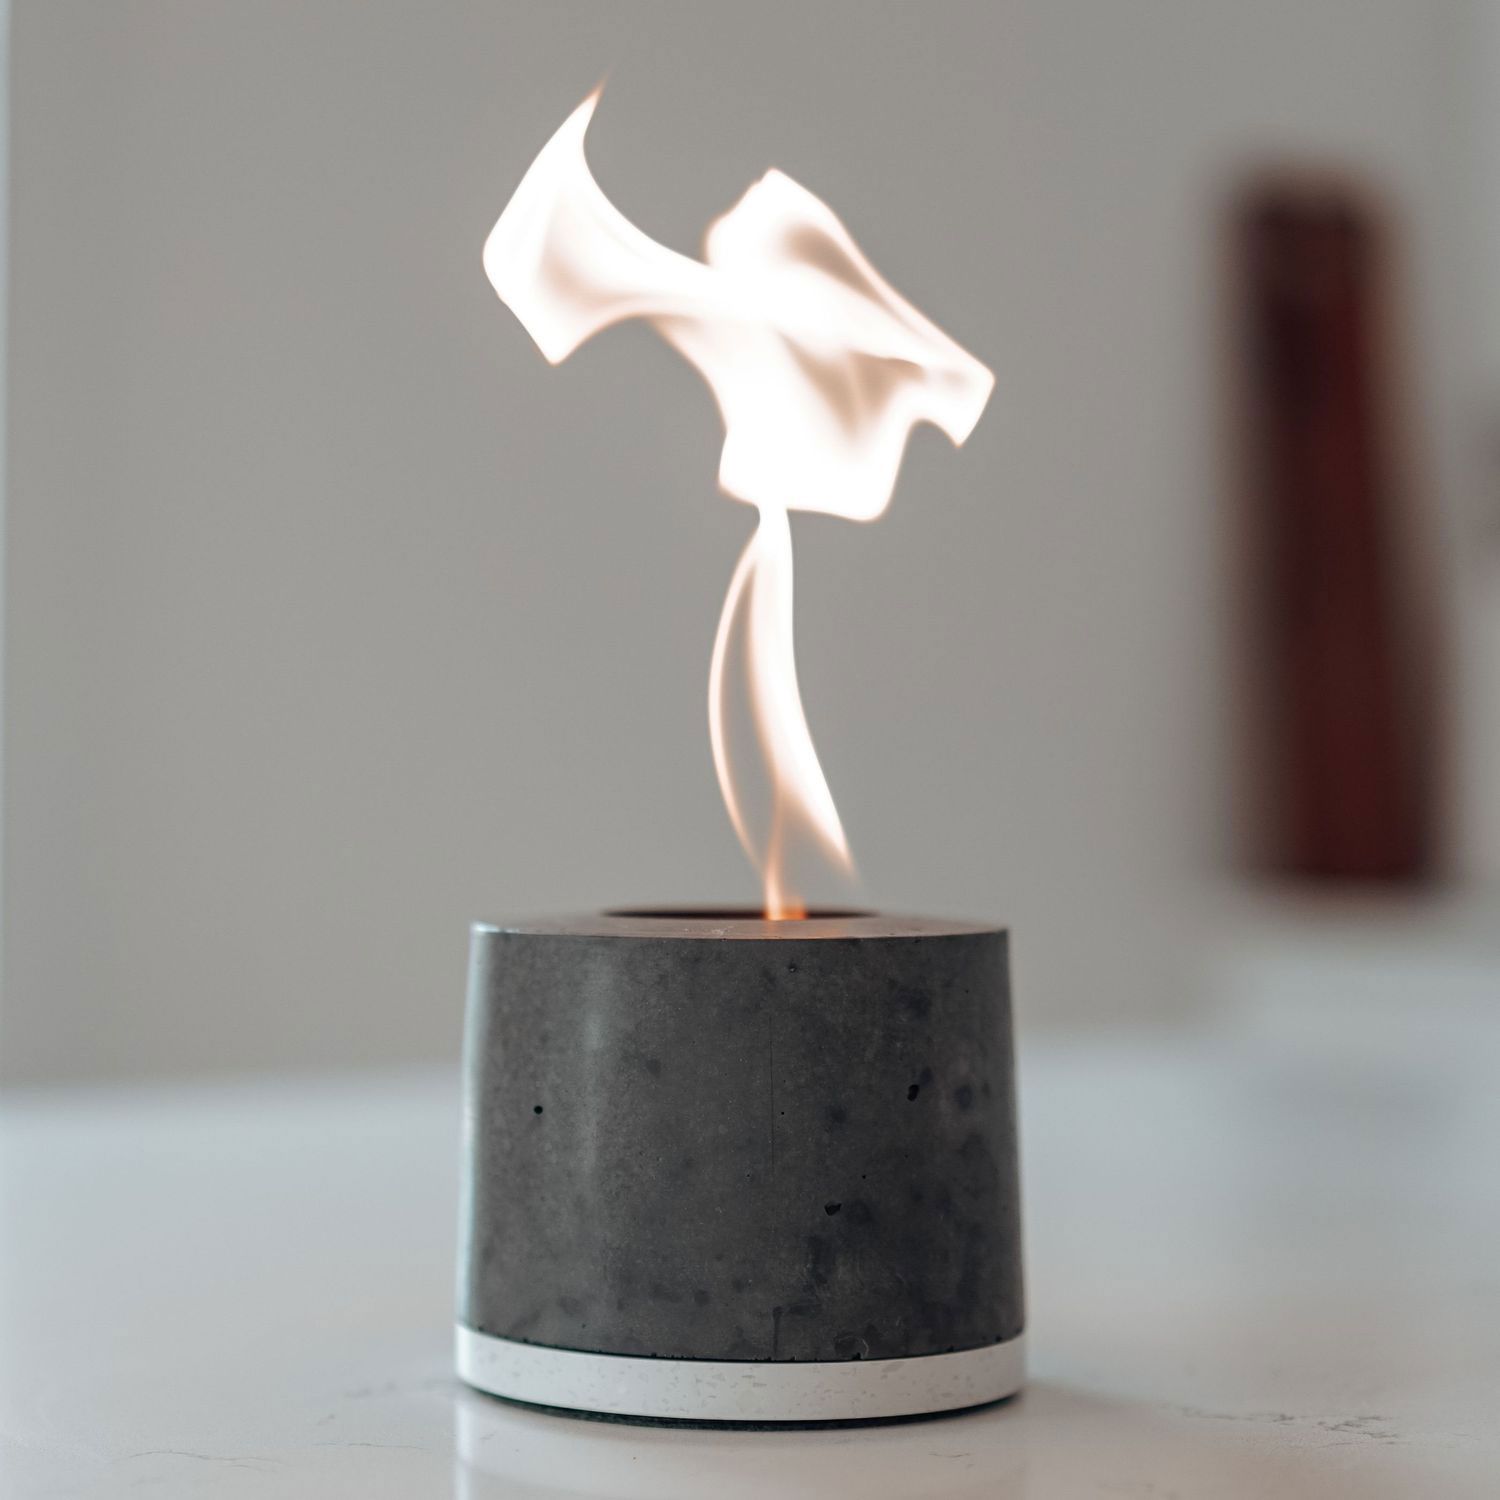 Los mejores regalos, ideas de regalos para mujeres - Flîkr Fire Personal Concrete Fireplace